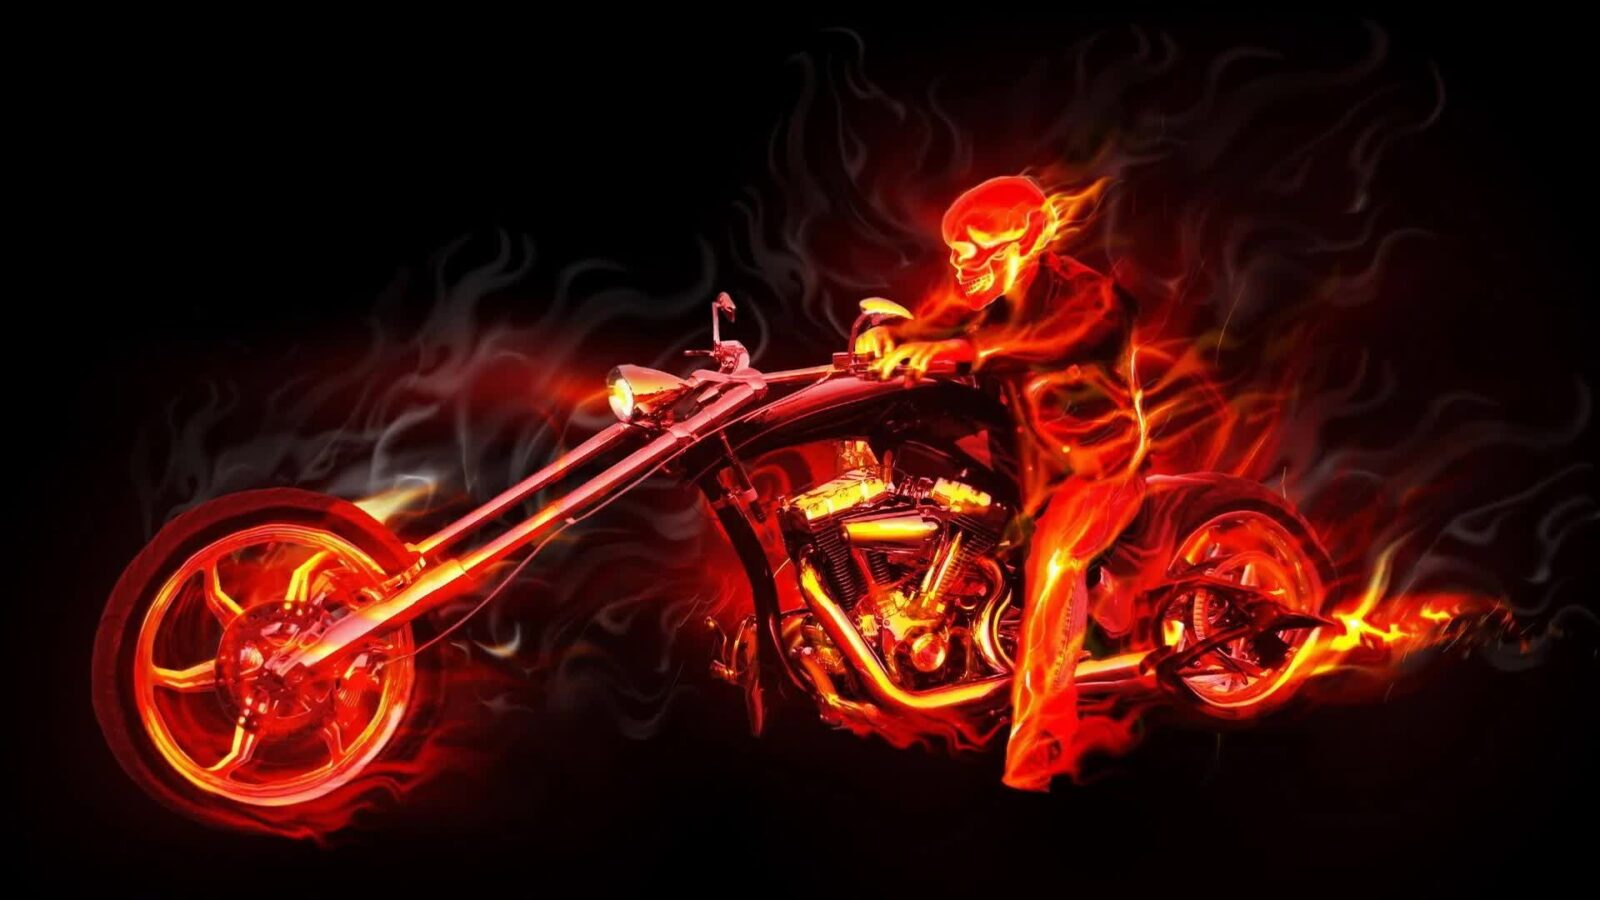 LiveWallpapers4Free.com | Dark Rider Or Ghost Rider Artwork - Free Live Wallpaper